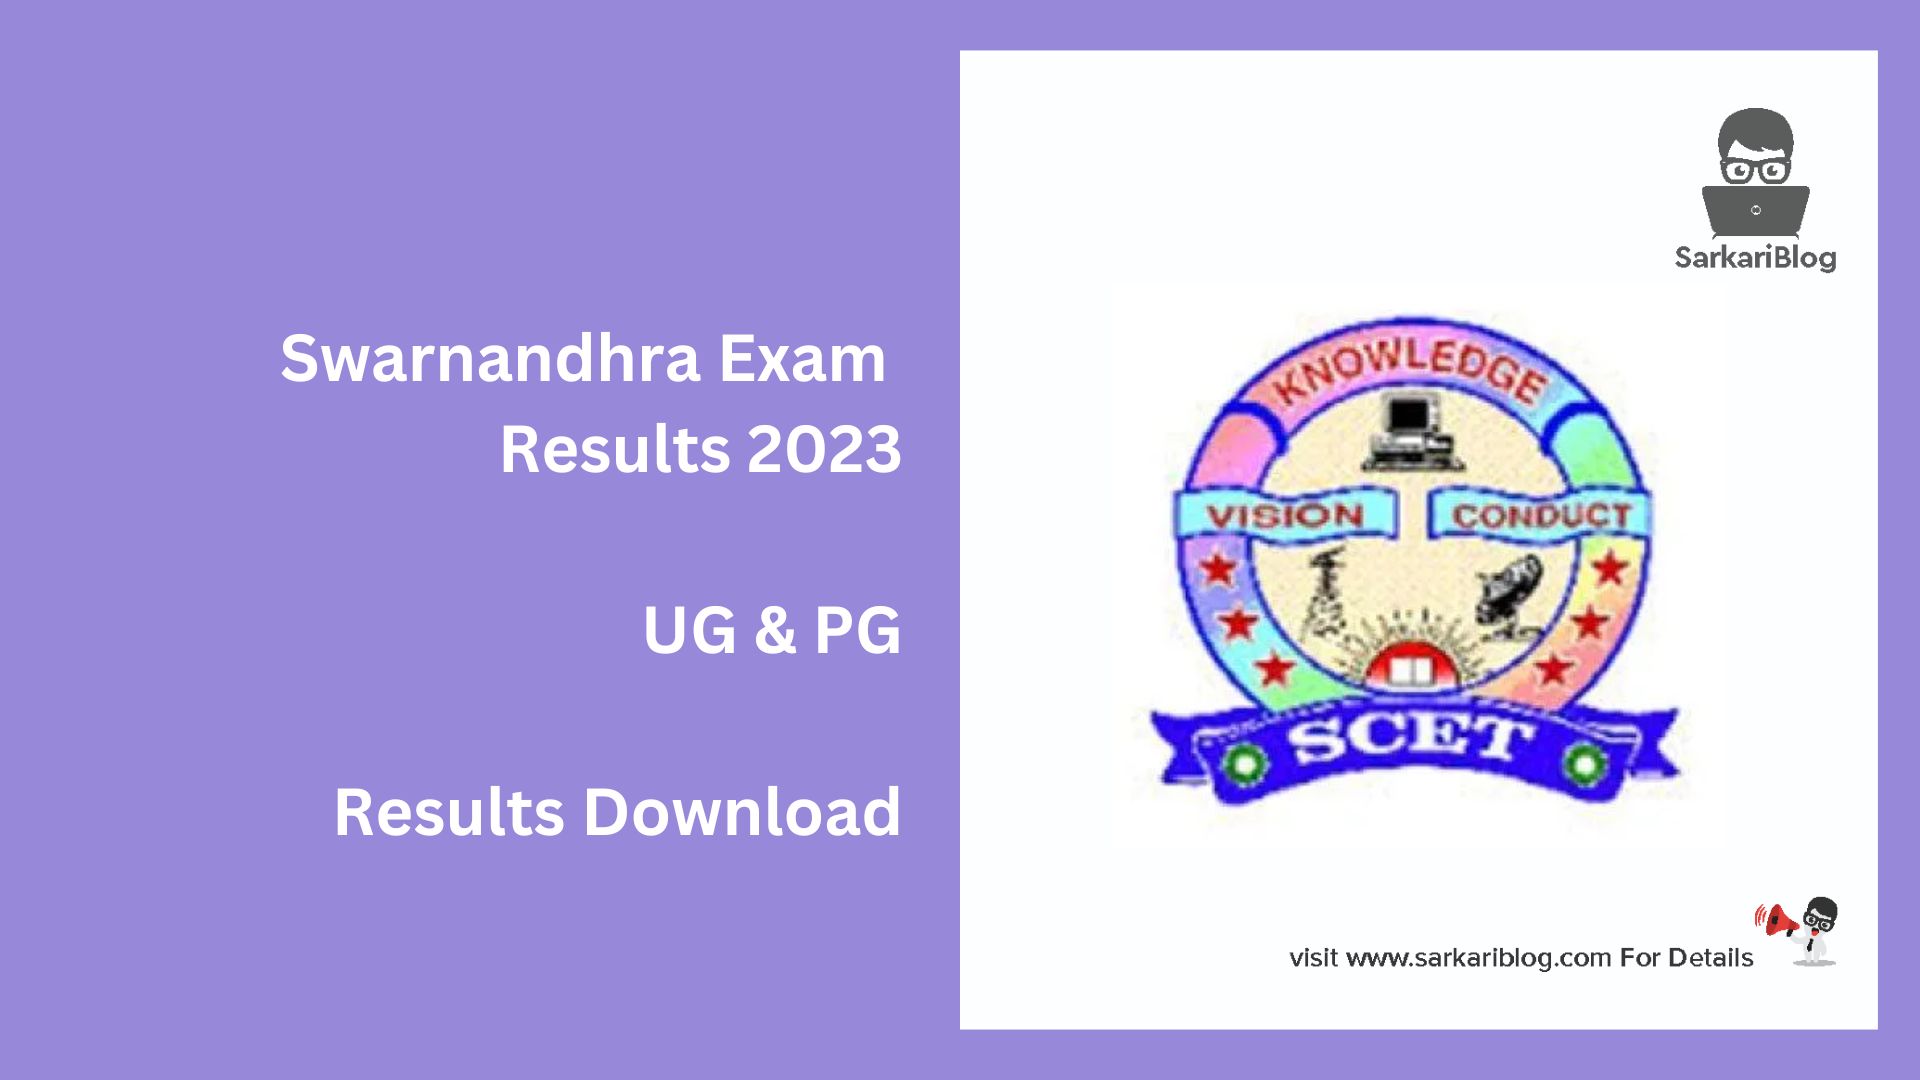 Swarnandhra Exam Results 2023